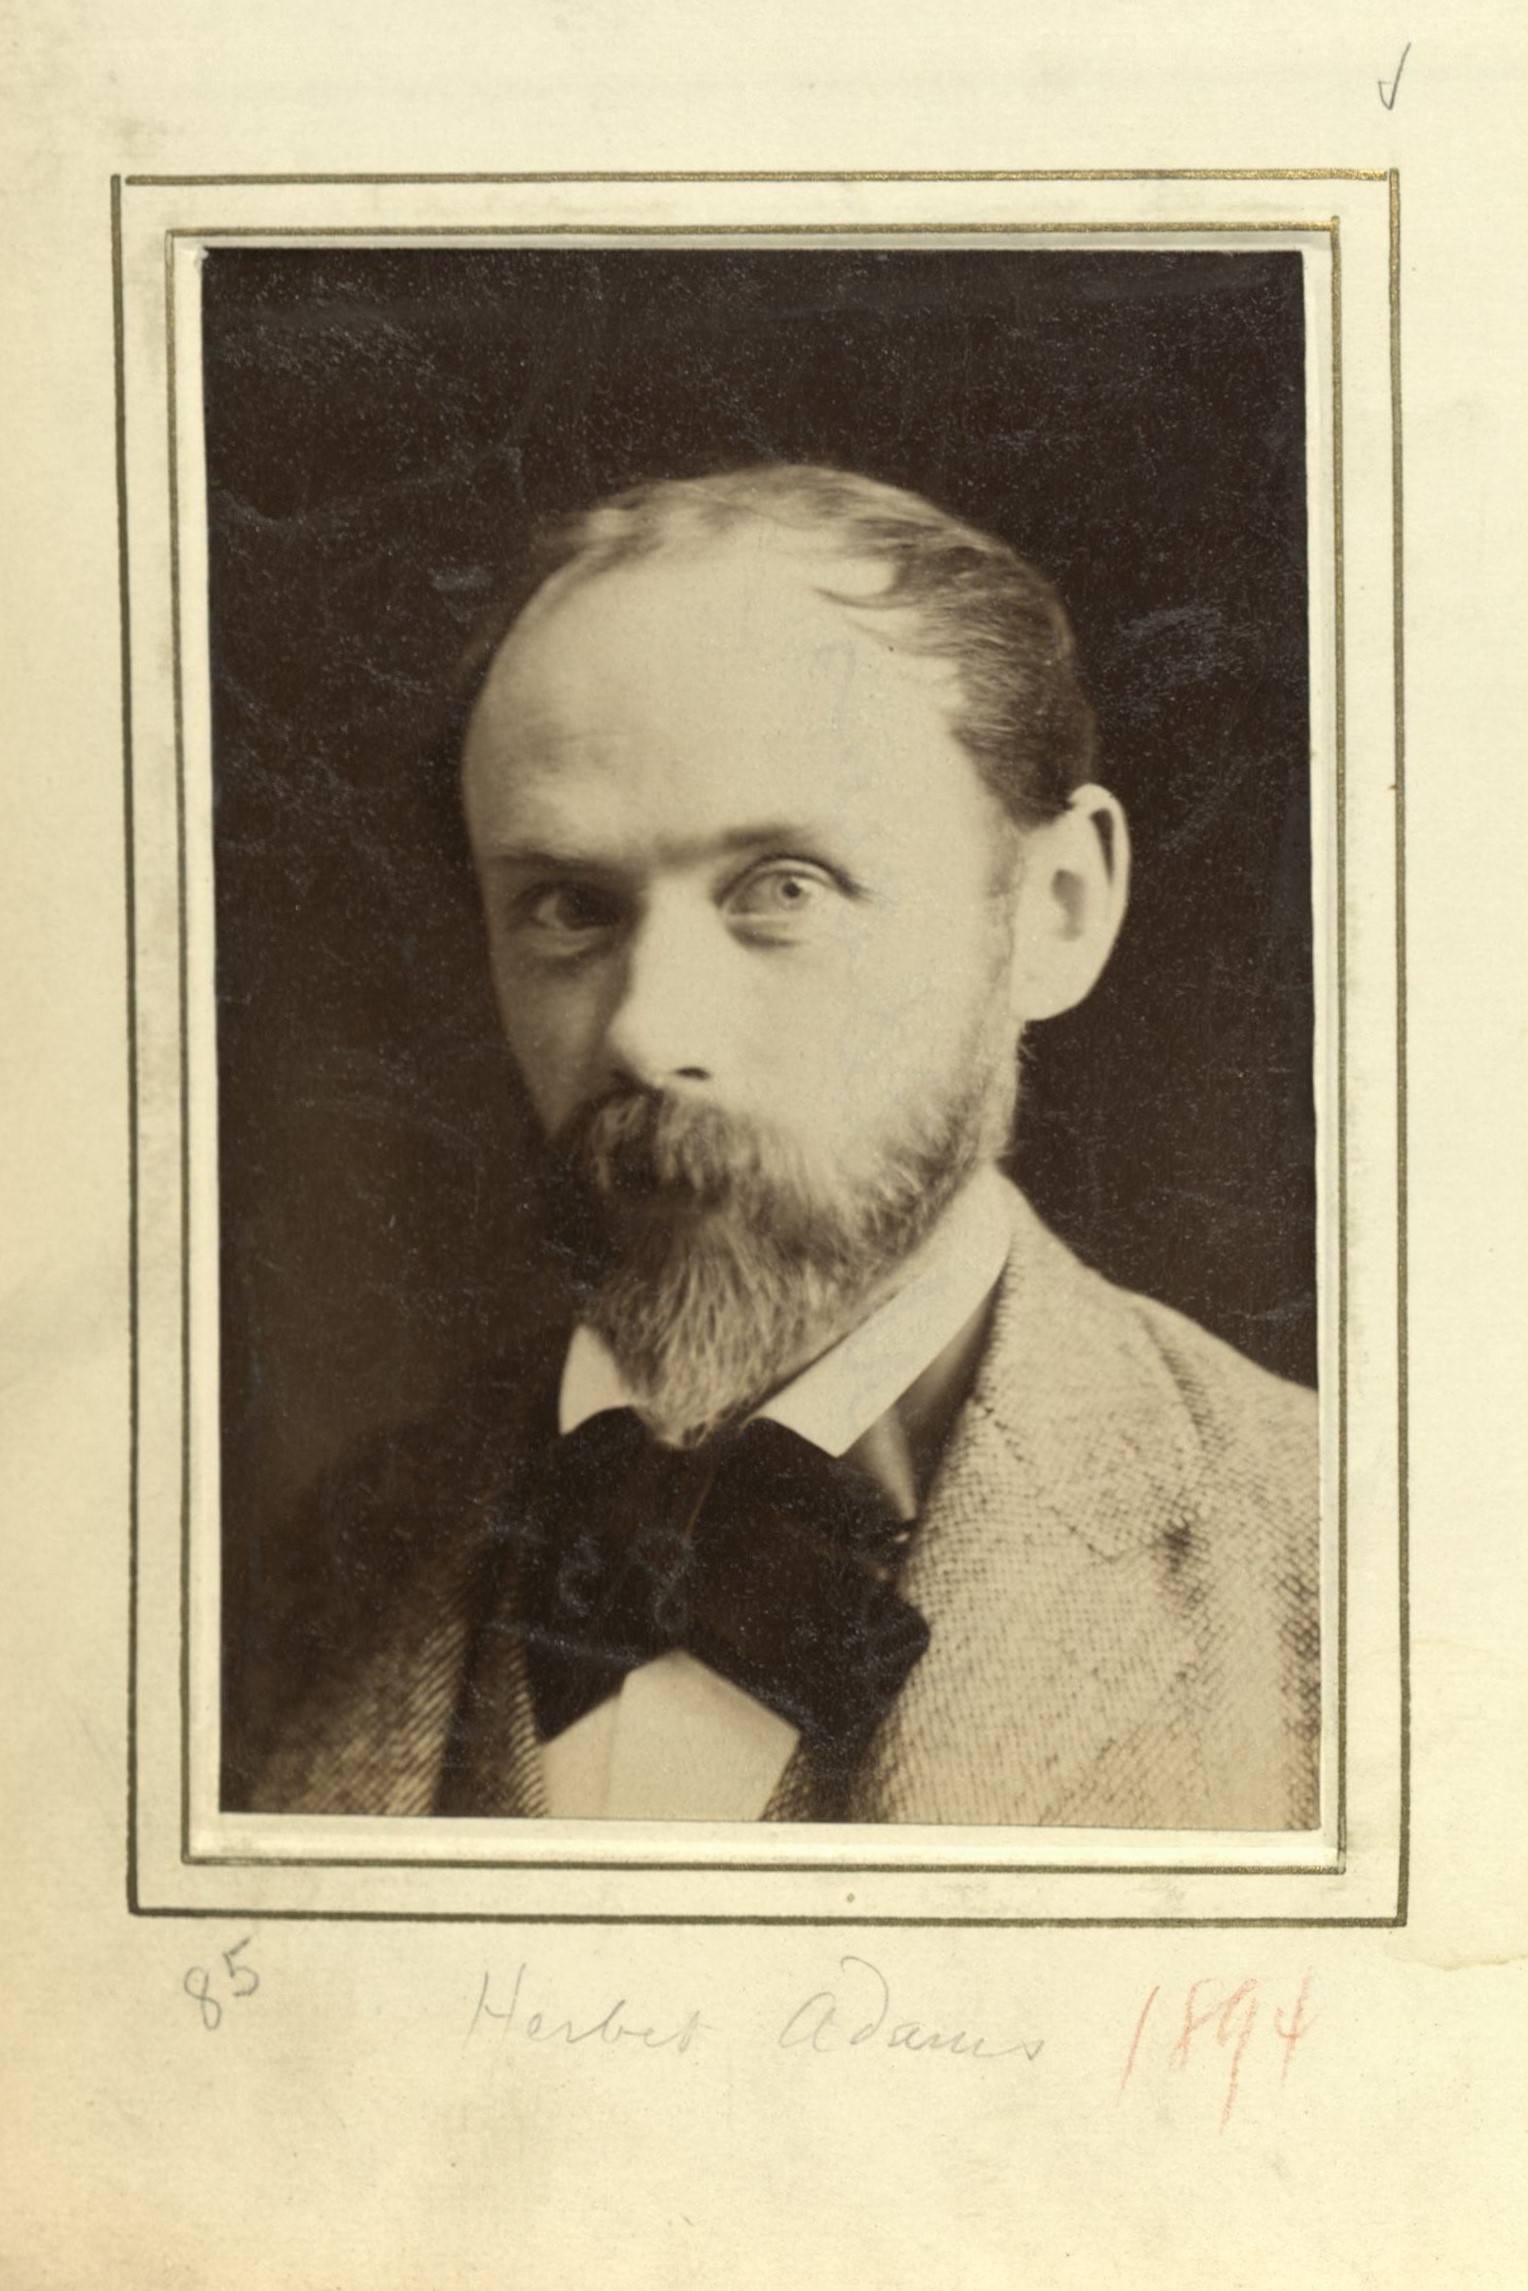 Member portrait of Herbert Adams